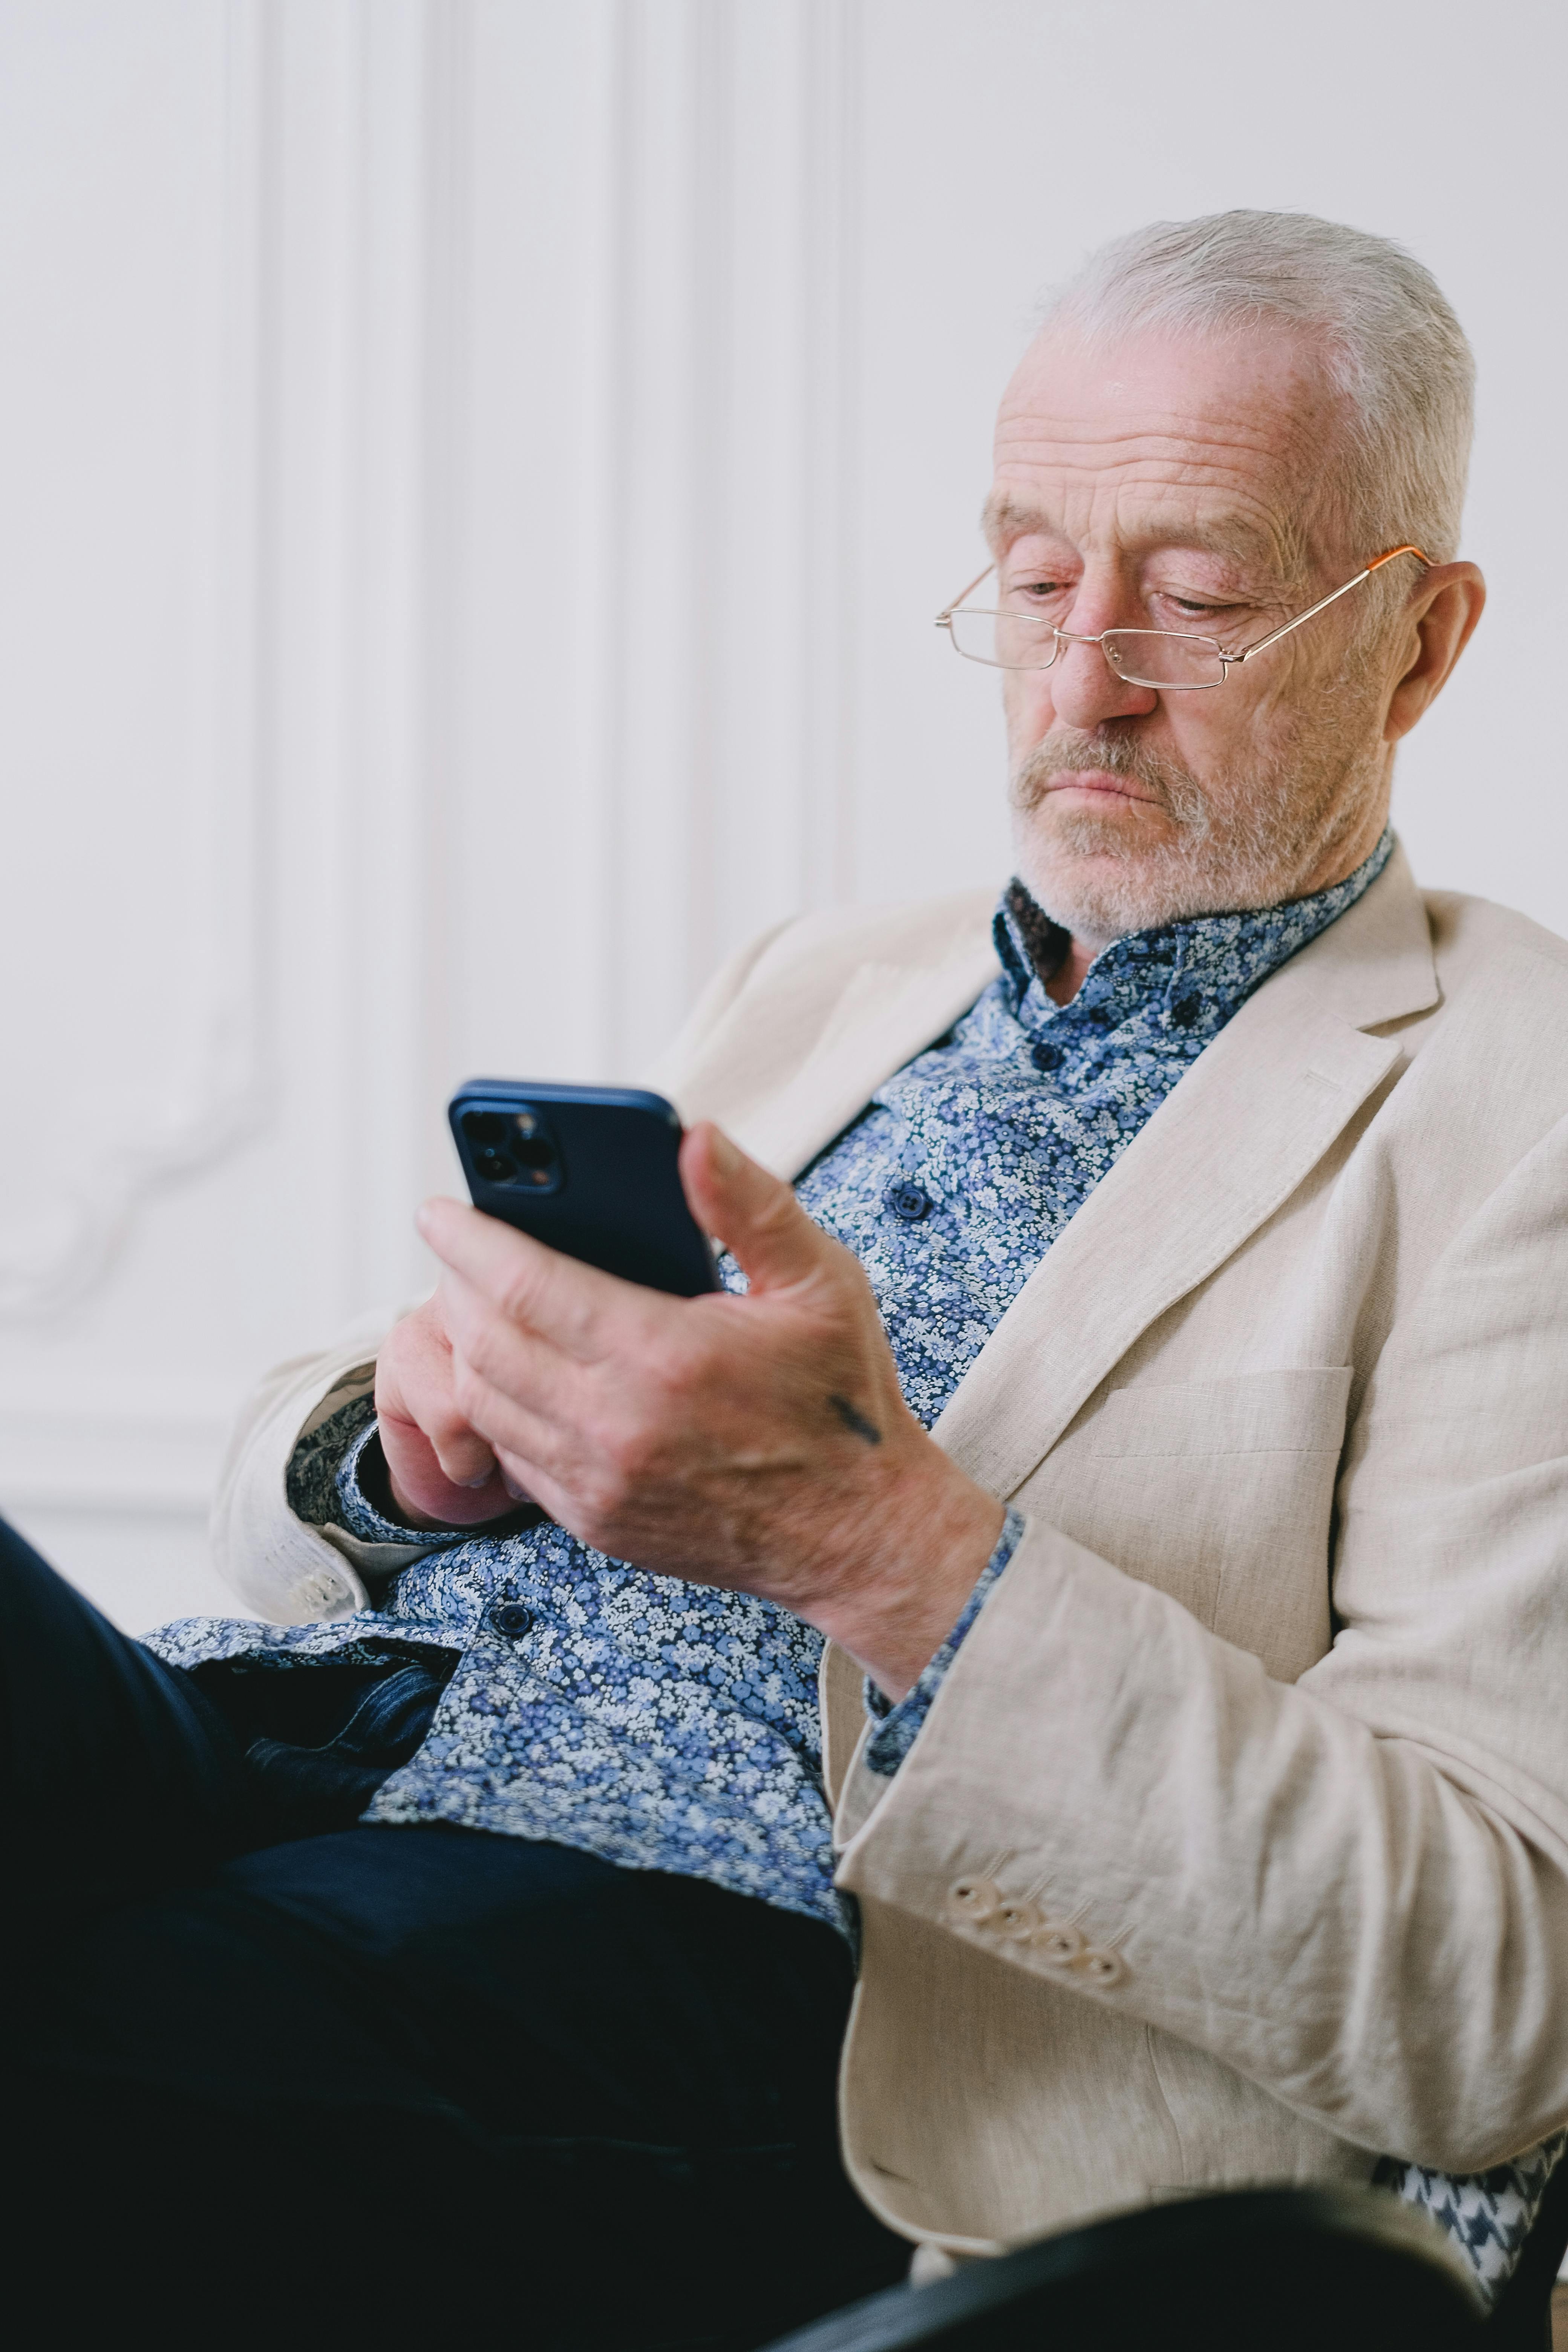 A man looking at his phone | Source: Pexels